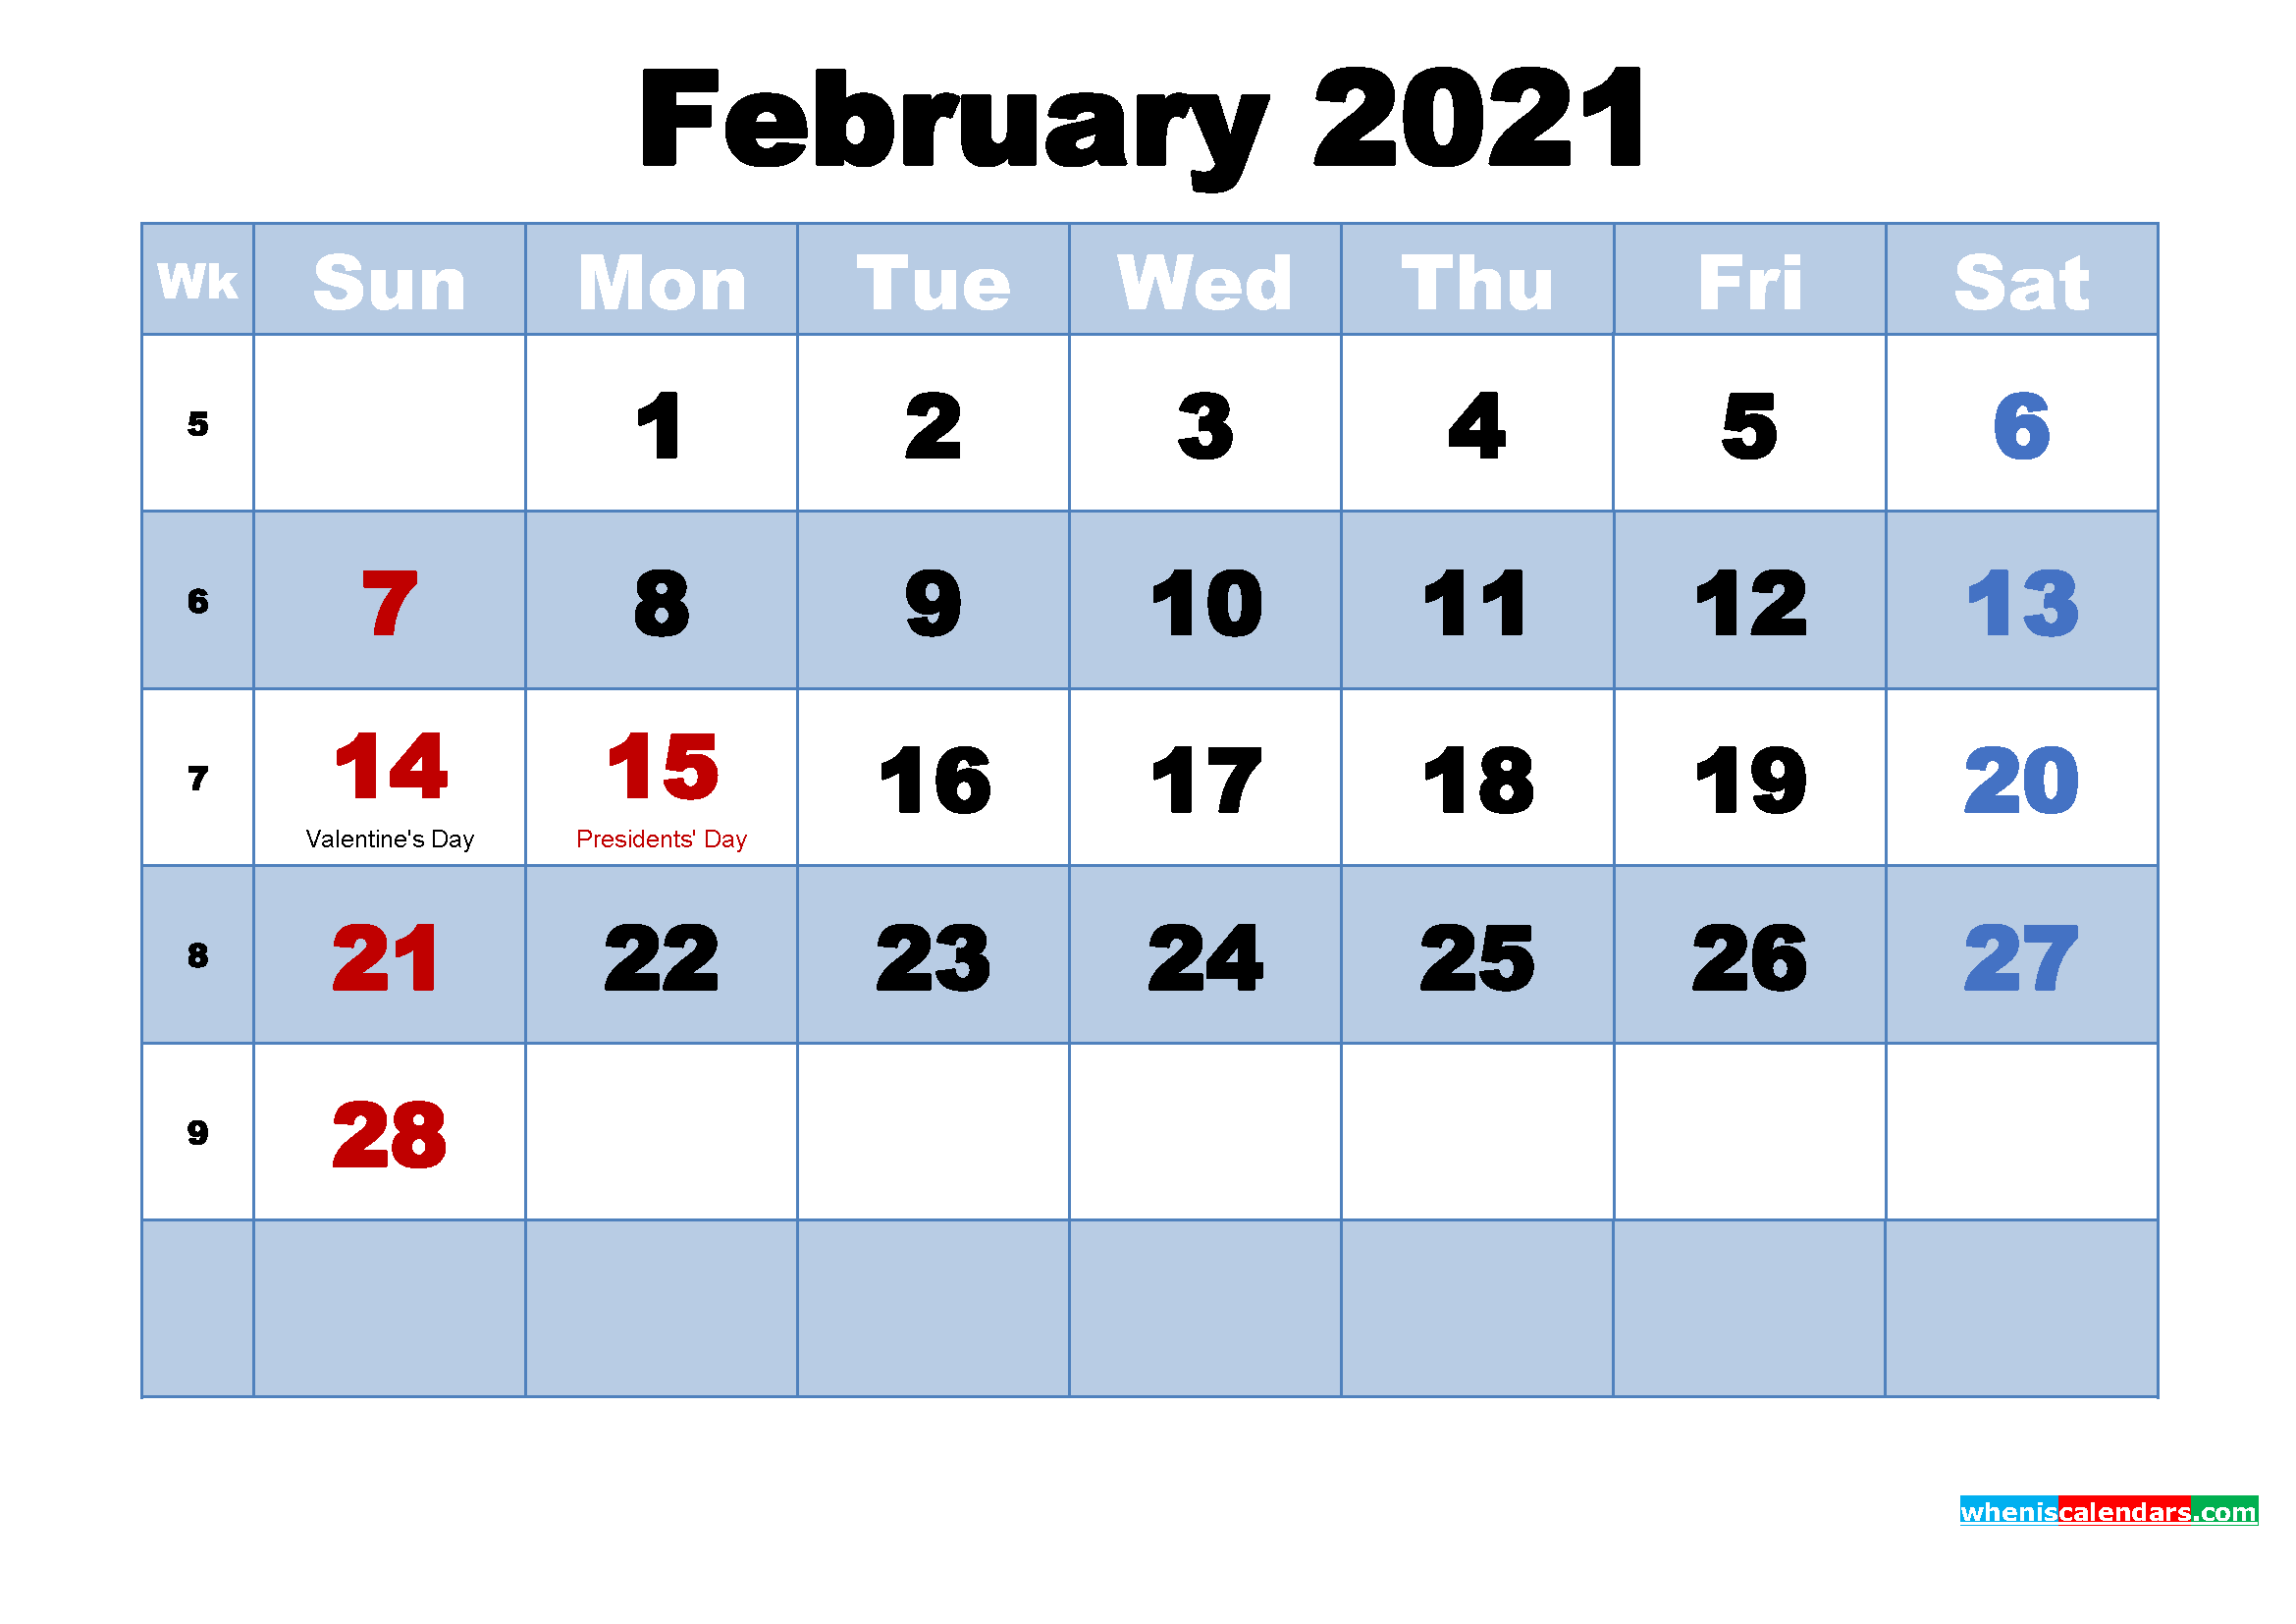 February 2021 Calendar Wallpaper Free February 2021 Calendar Background